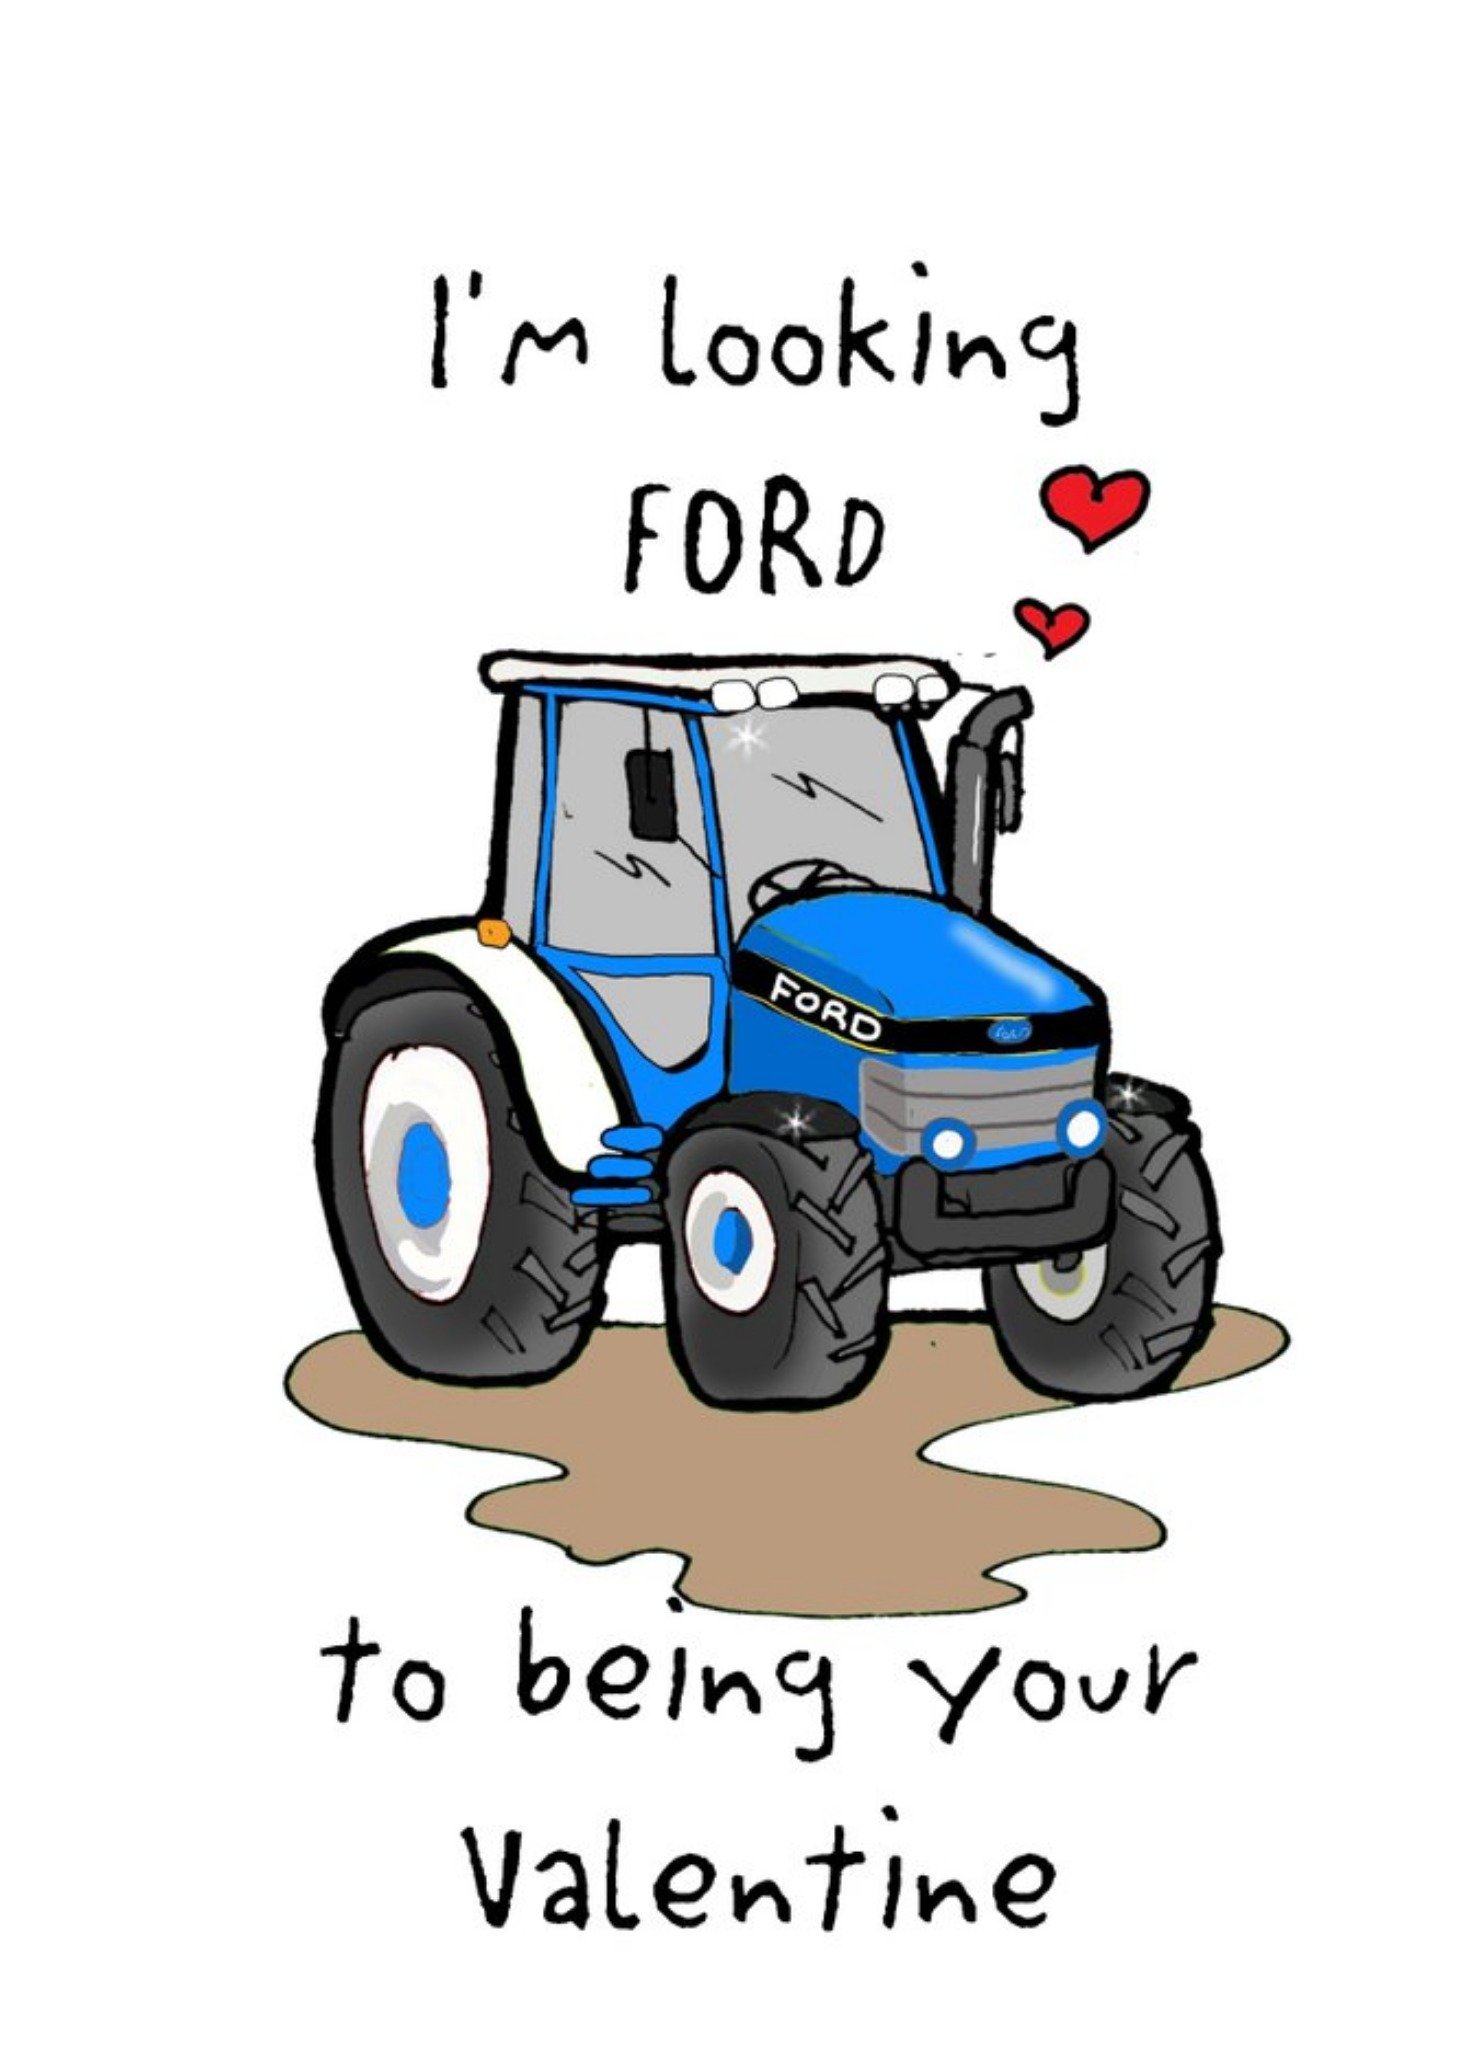 Love Hearts Karen Flanart Illustration Irish Ford Tractor Valentine's Funny Card, Large